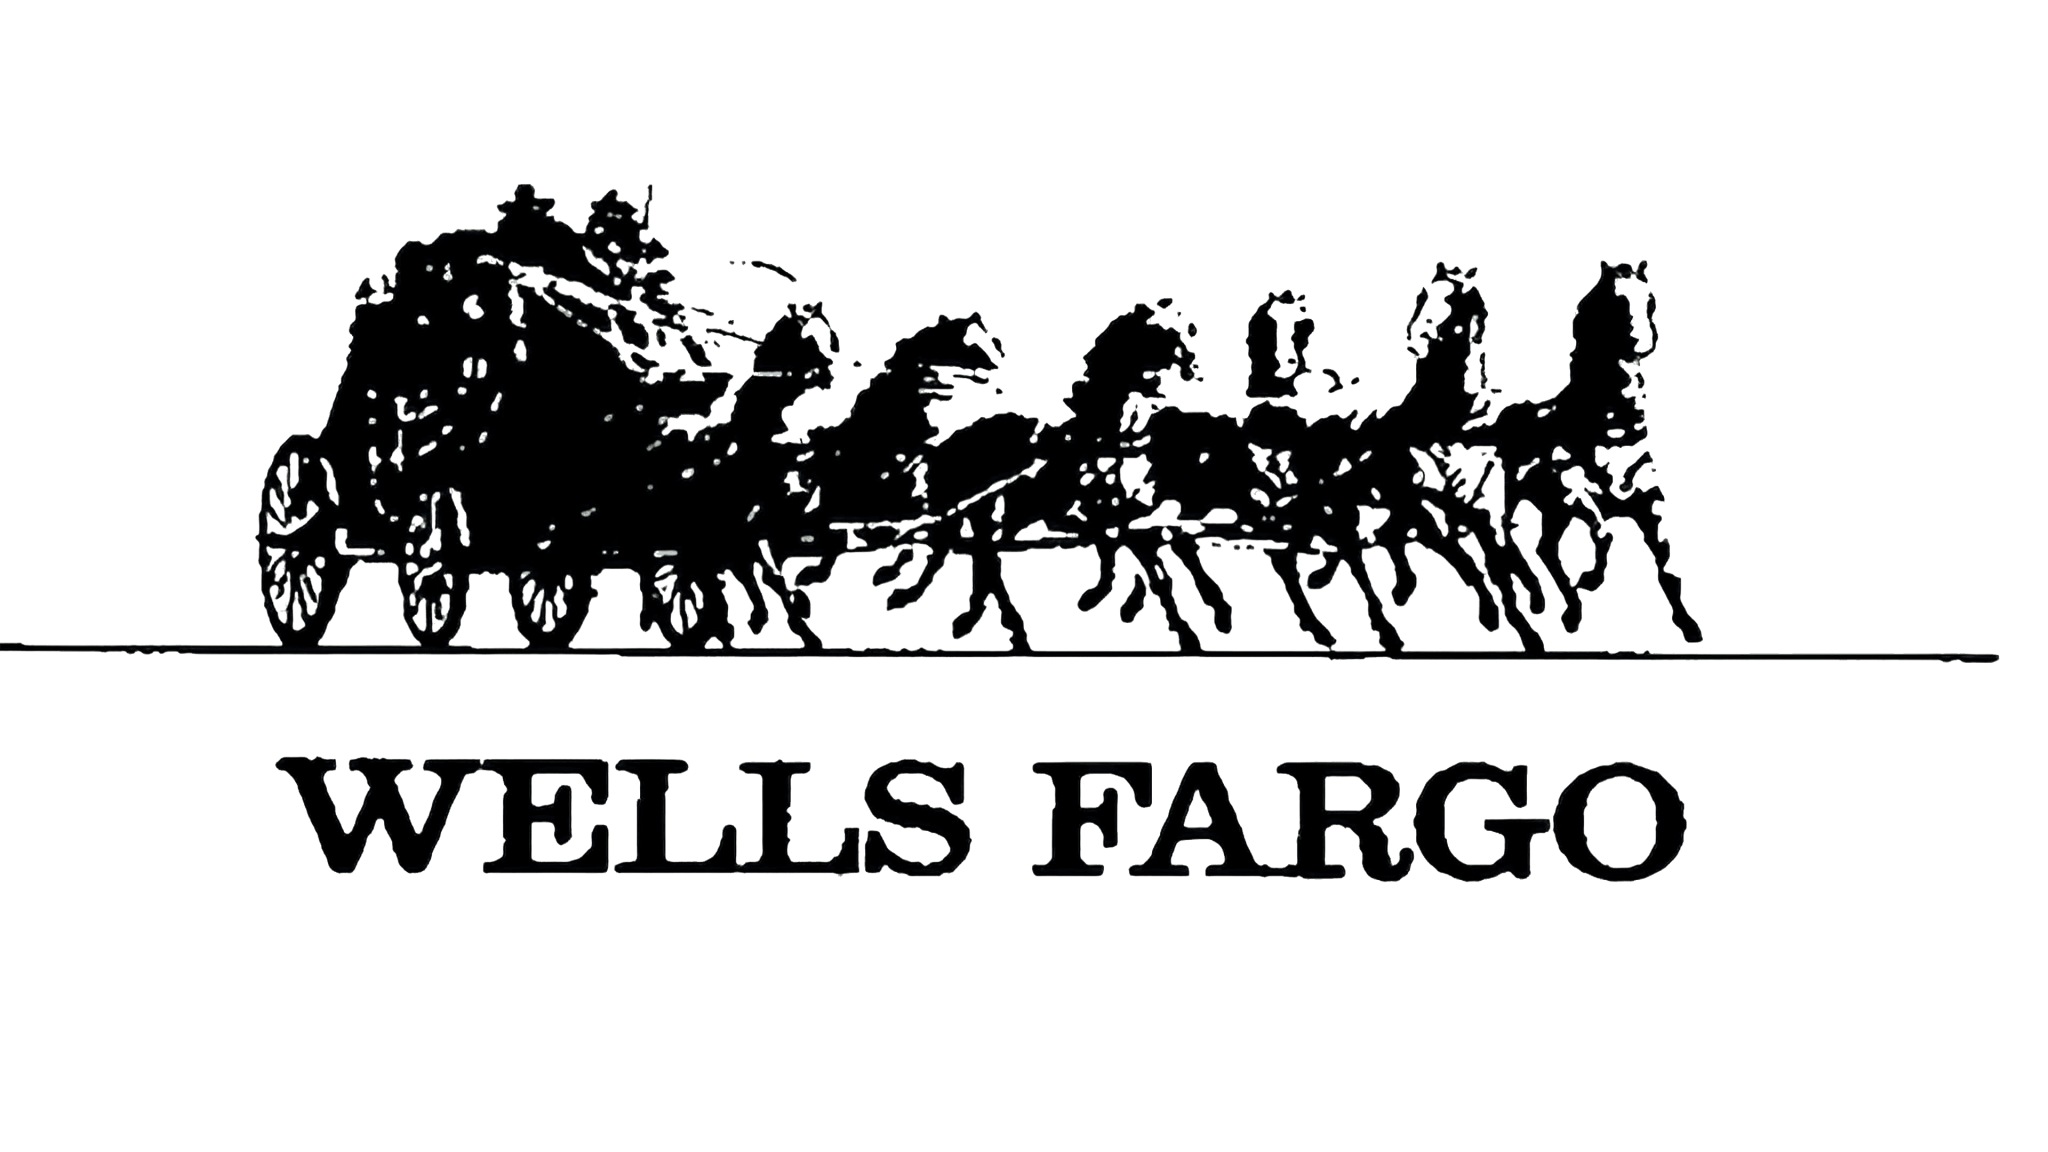 T me wellsfargo. Уэллс Фарго. Wells Fargo logo. Wells Fargo & co лого. Девиз компании wells Fargo.